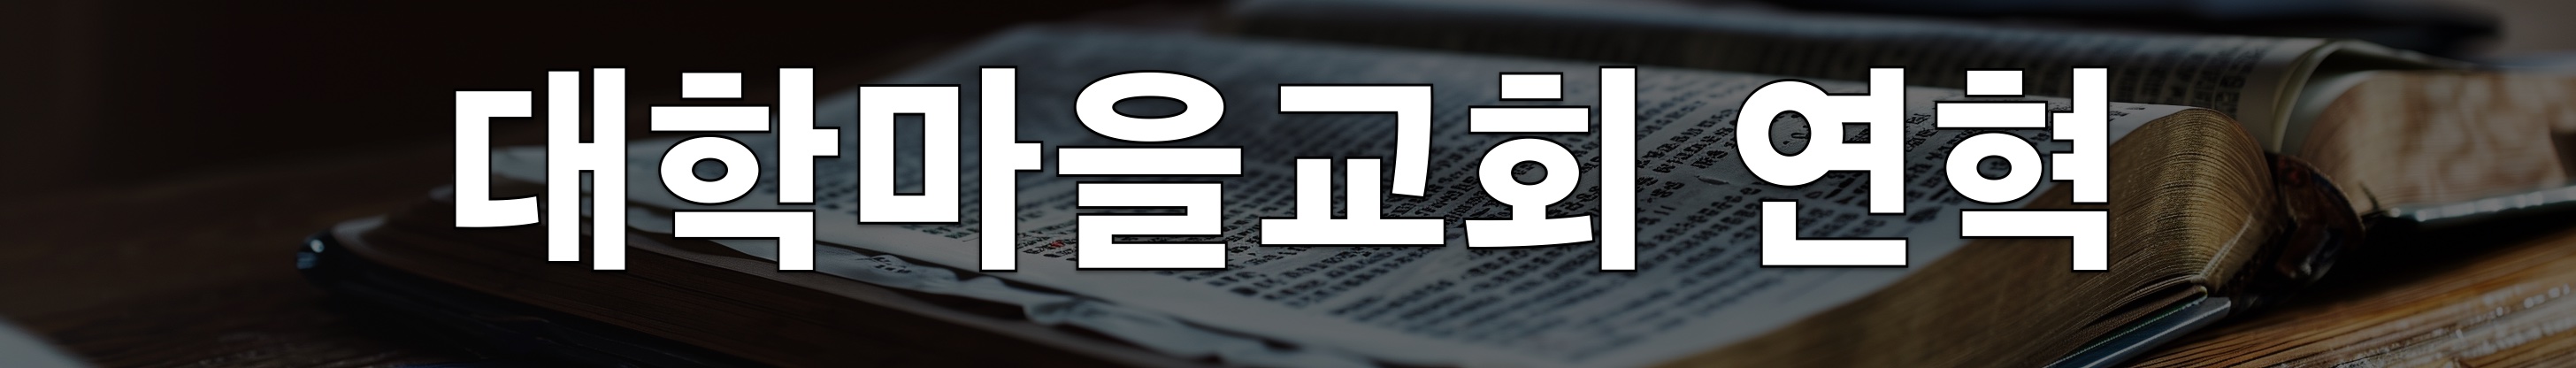 korean.ninja_Use_for_homepage_image_of_moderan_south_korean_Pre_8b3807c4-c9ee-4dff-b04d-d8ea074ddd2a.jpg